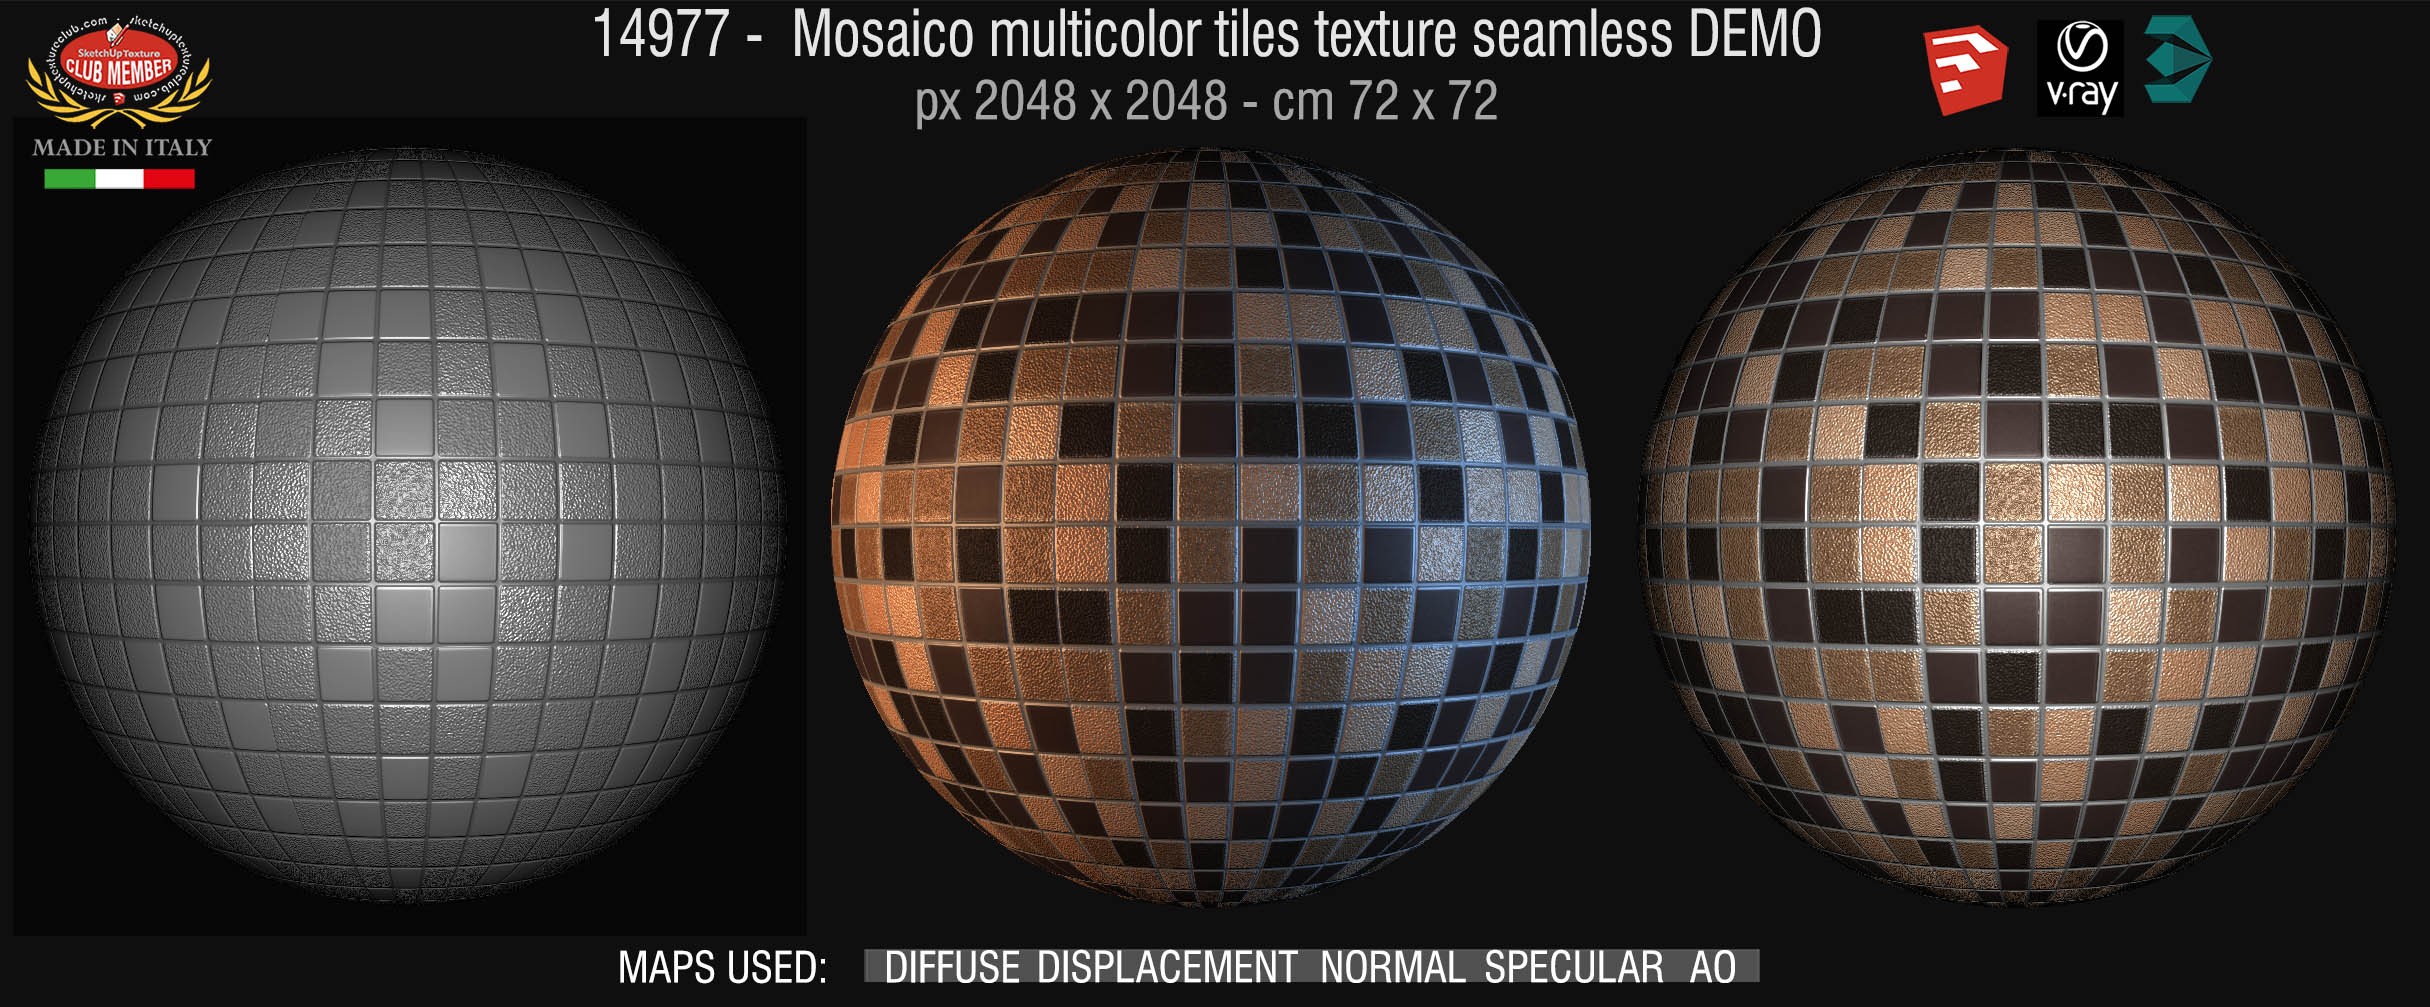 14977 Mosaico multicolor tiles texture seamless + maps DEMO